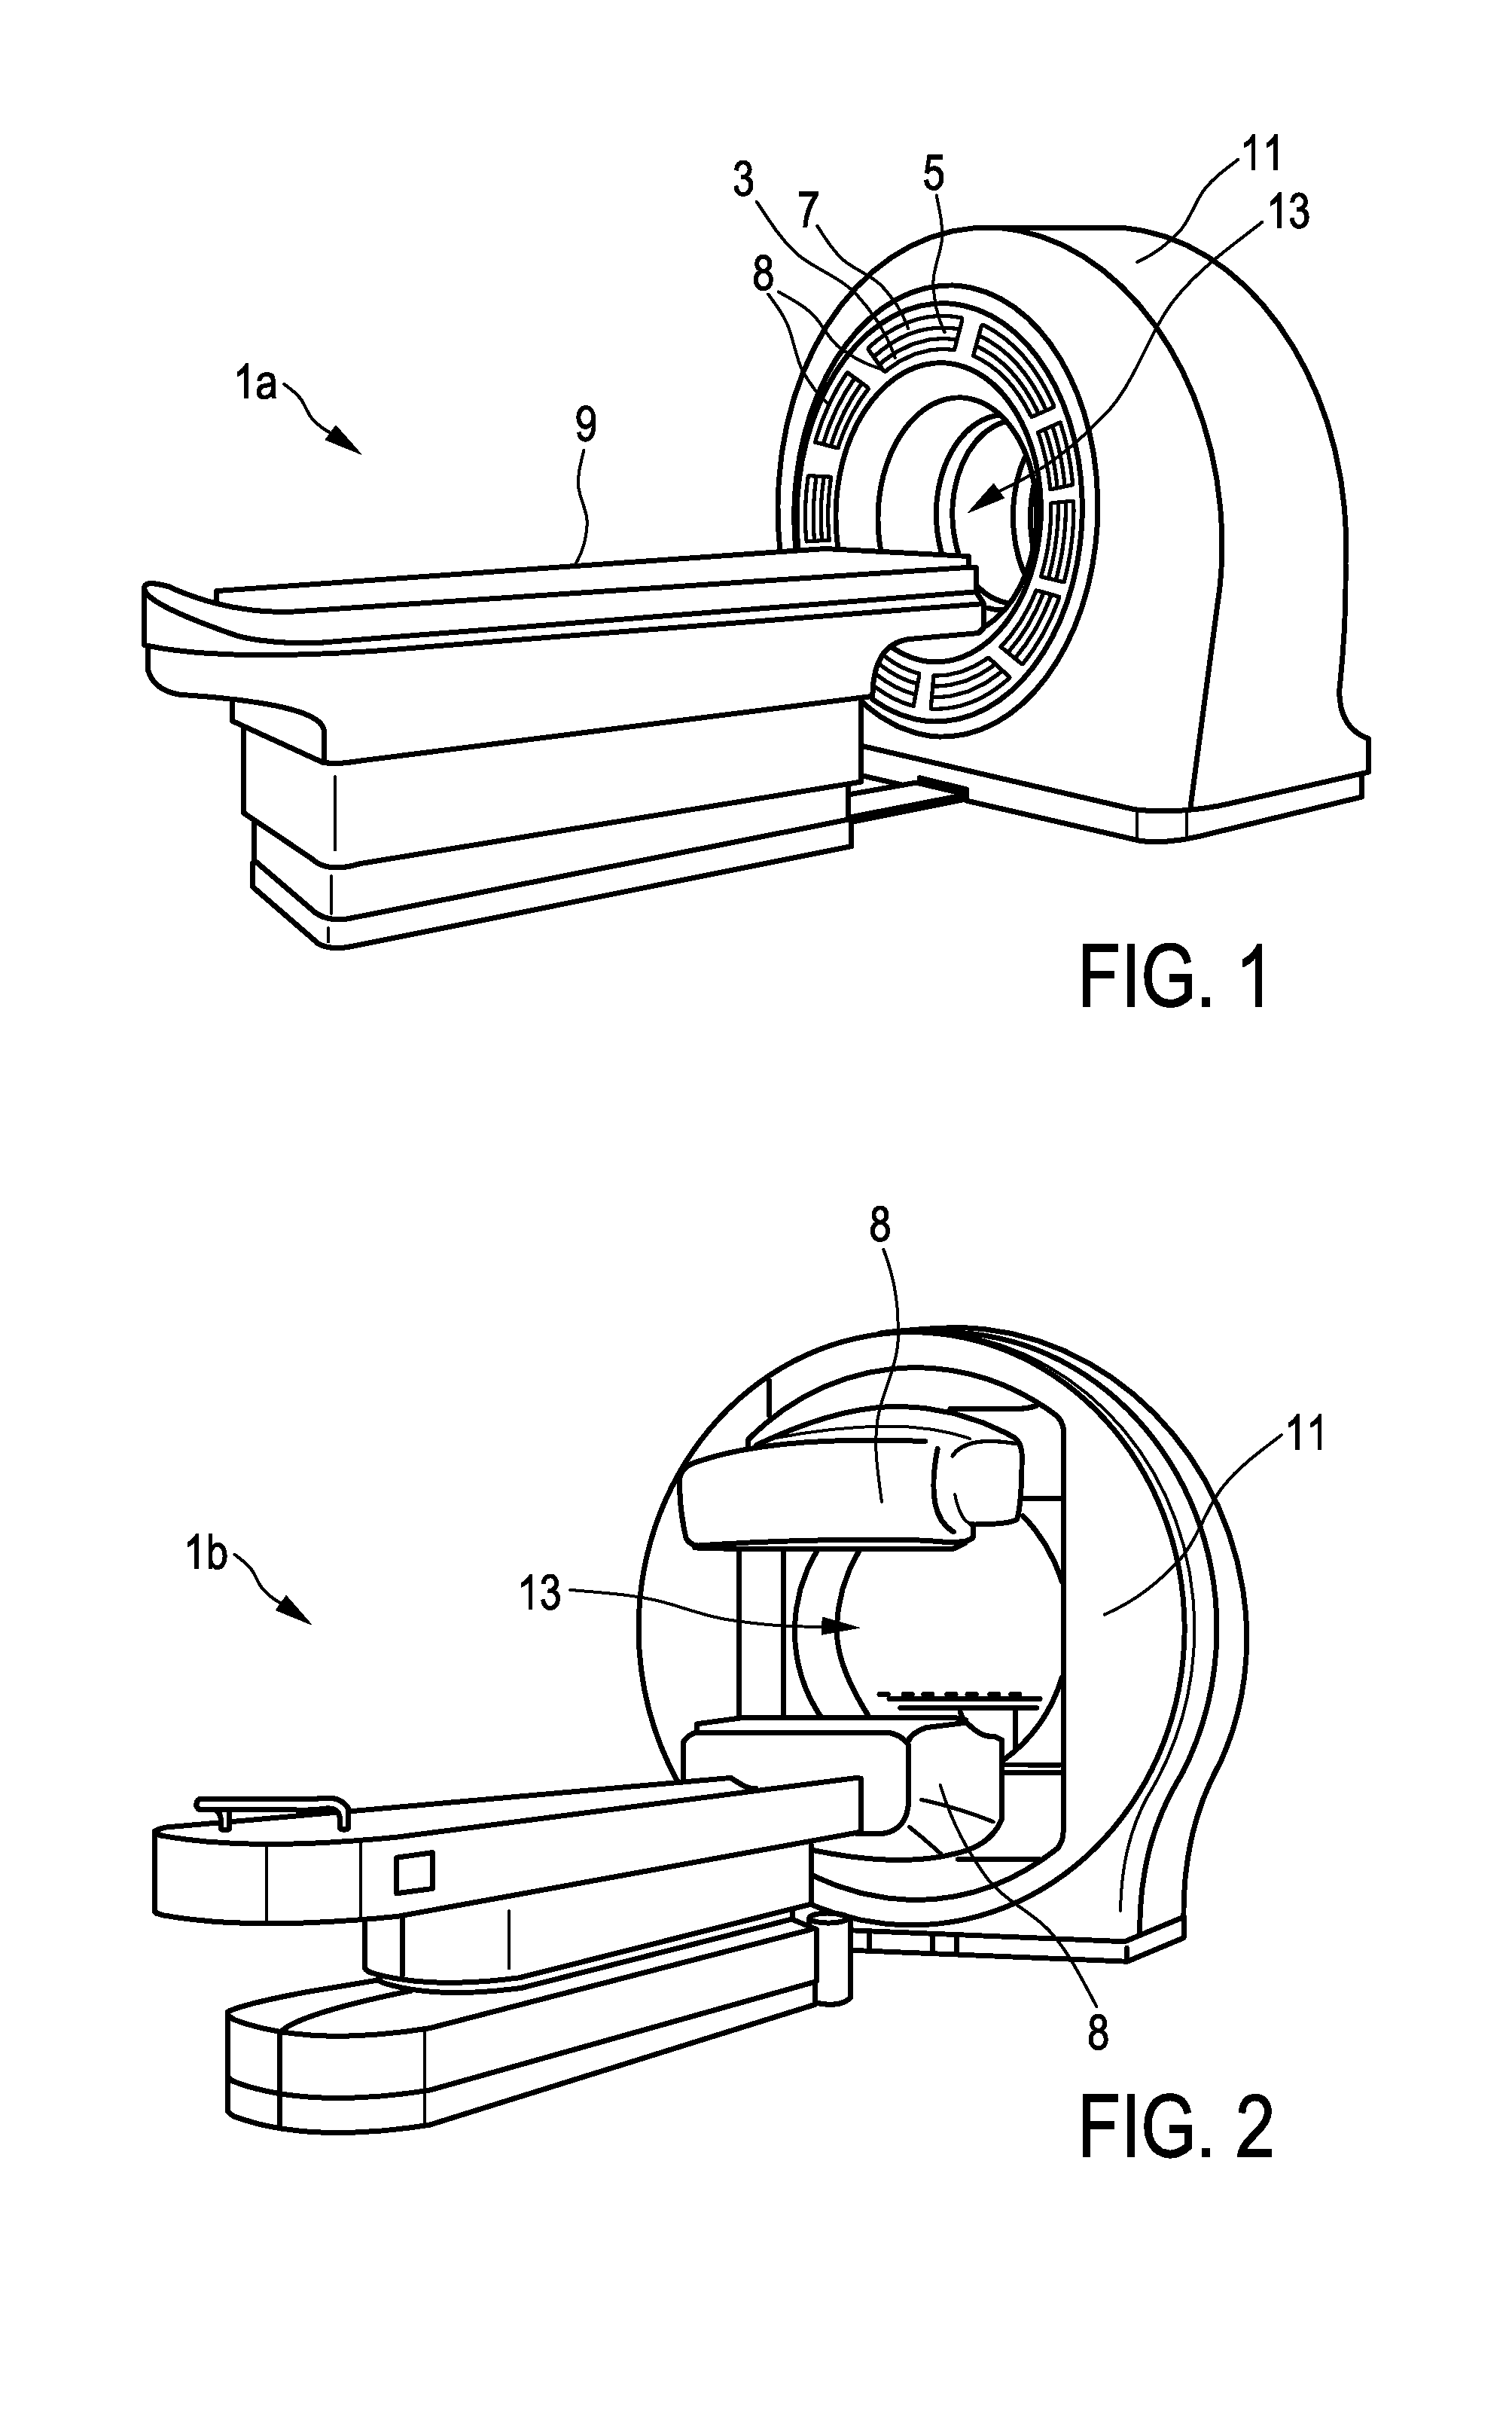 Multimodal imaging apparatus